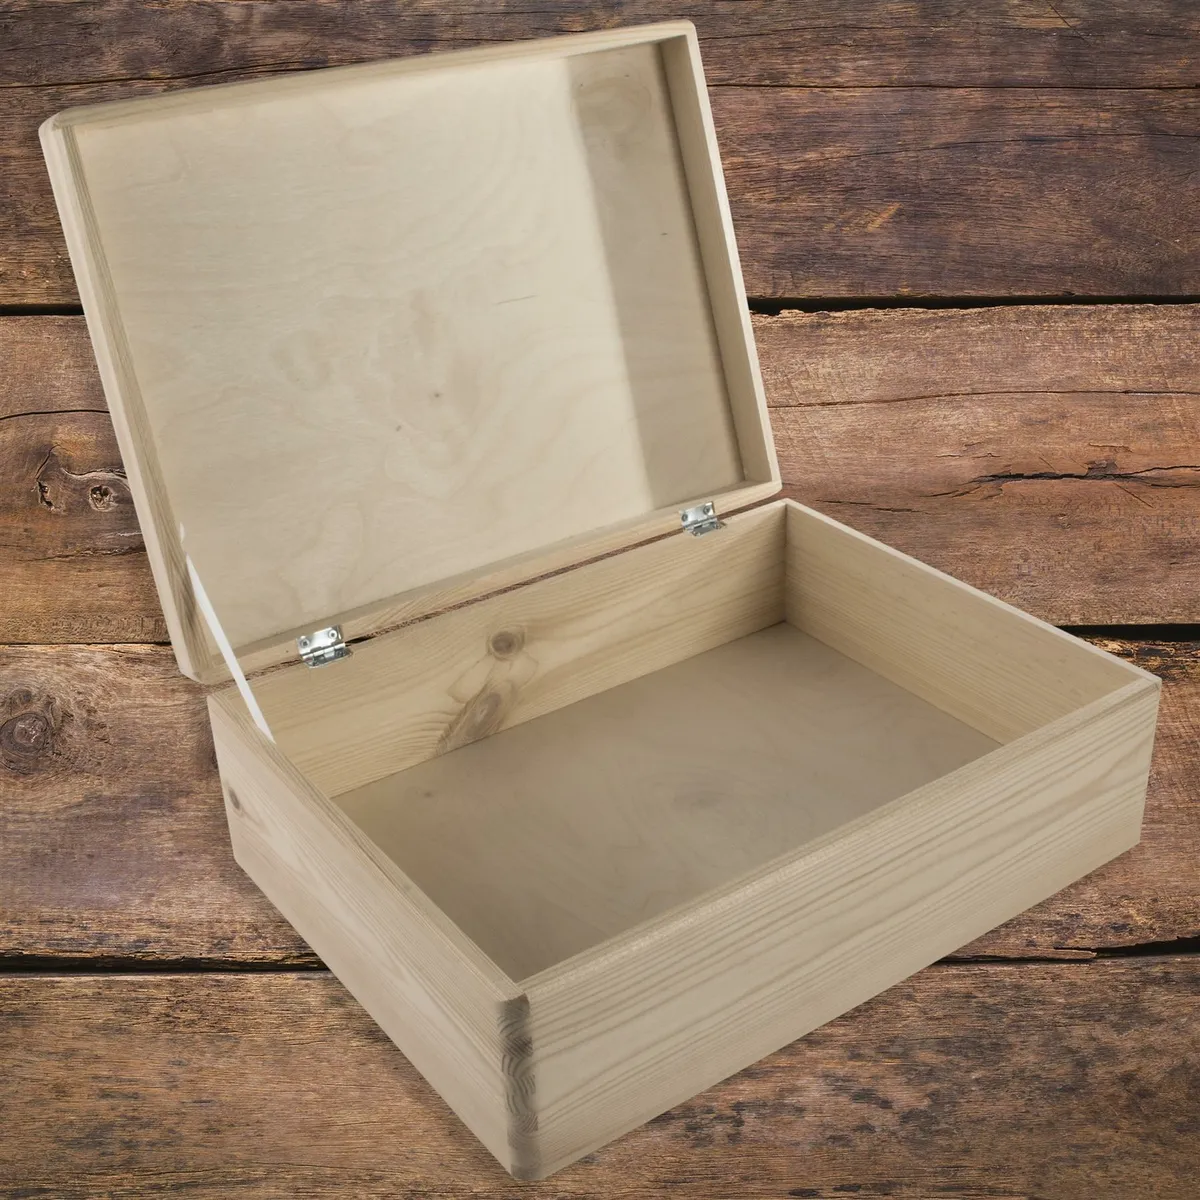 Wooden Box with Lid | 40 x 30 x 14 cm | Keepsake Chest Plain Pine Decor  Craft